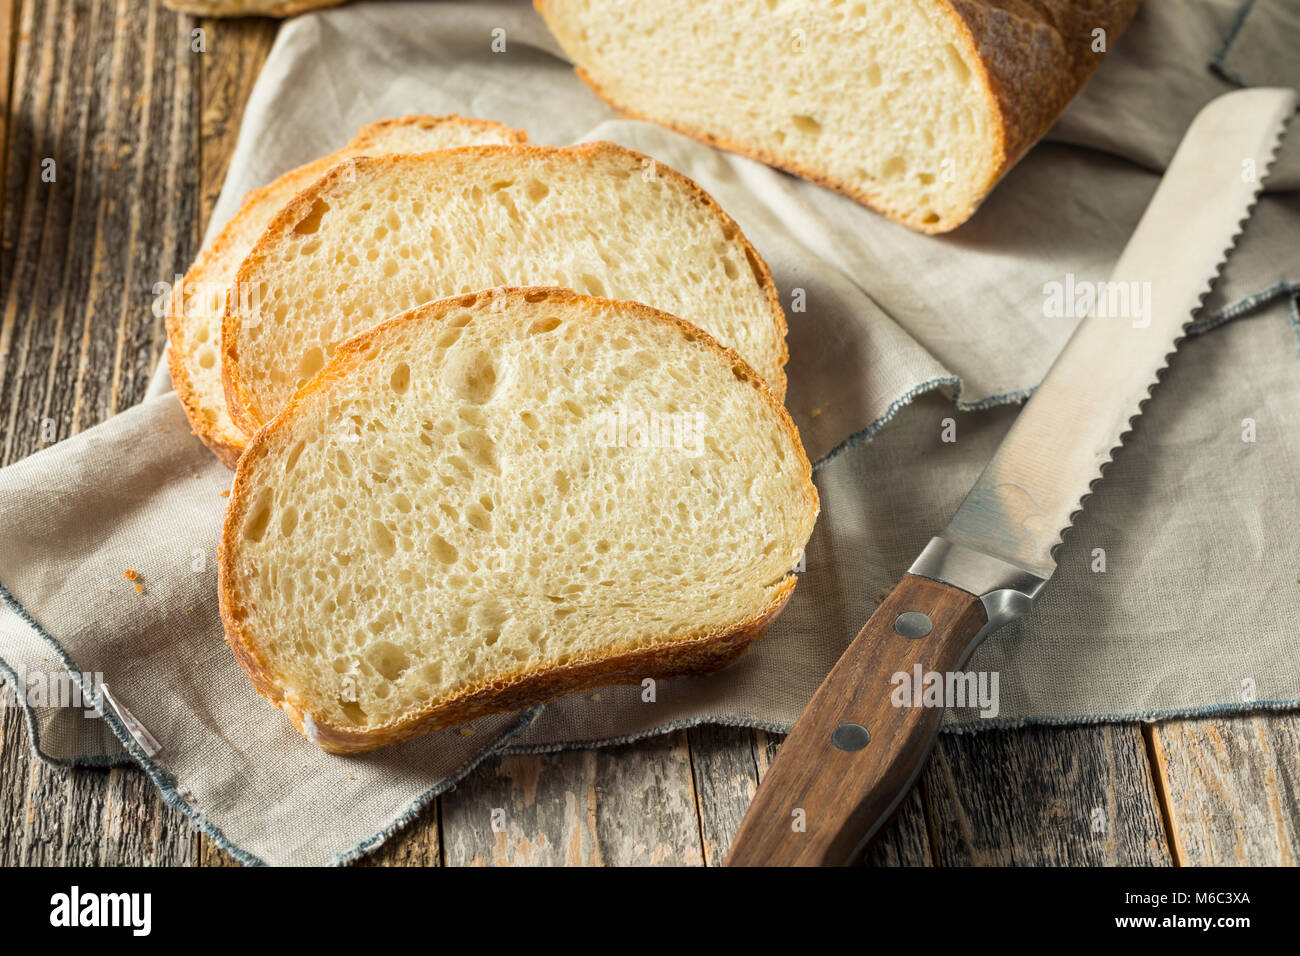 Whole Grain White French Bread Cut into Slices Stock Photo